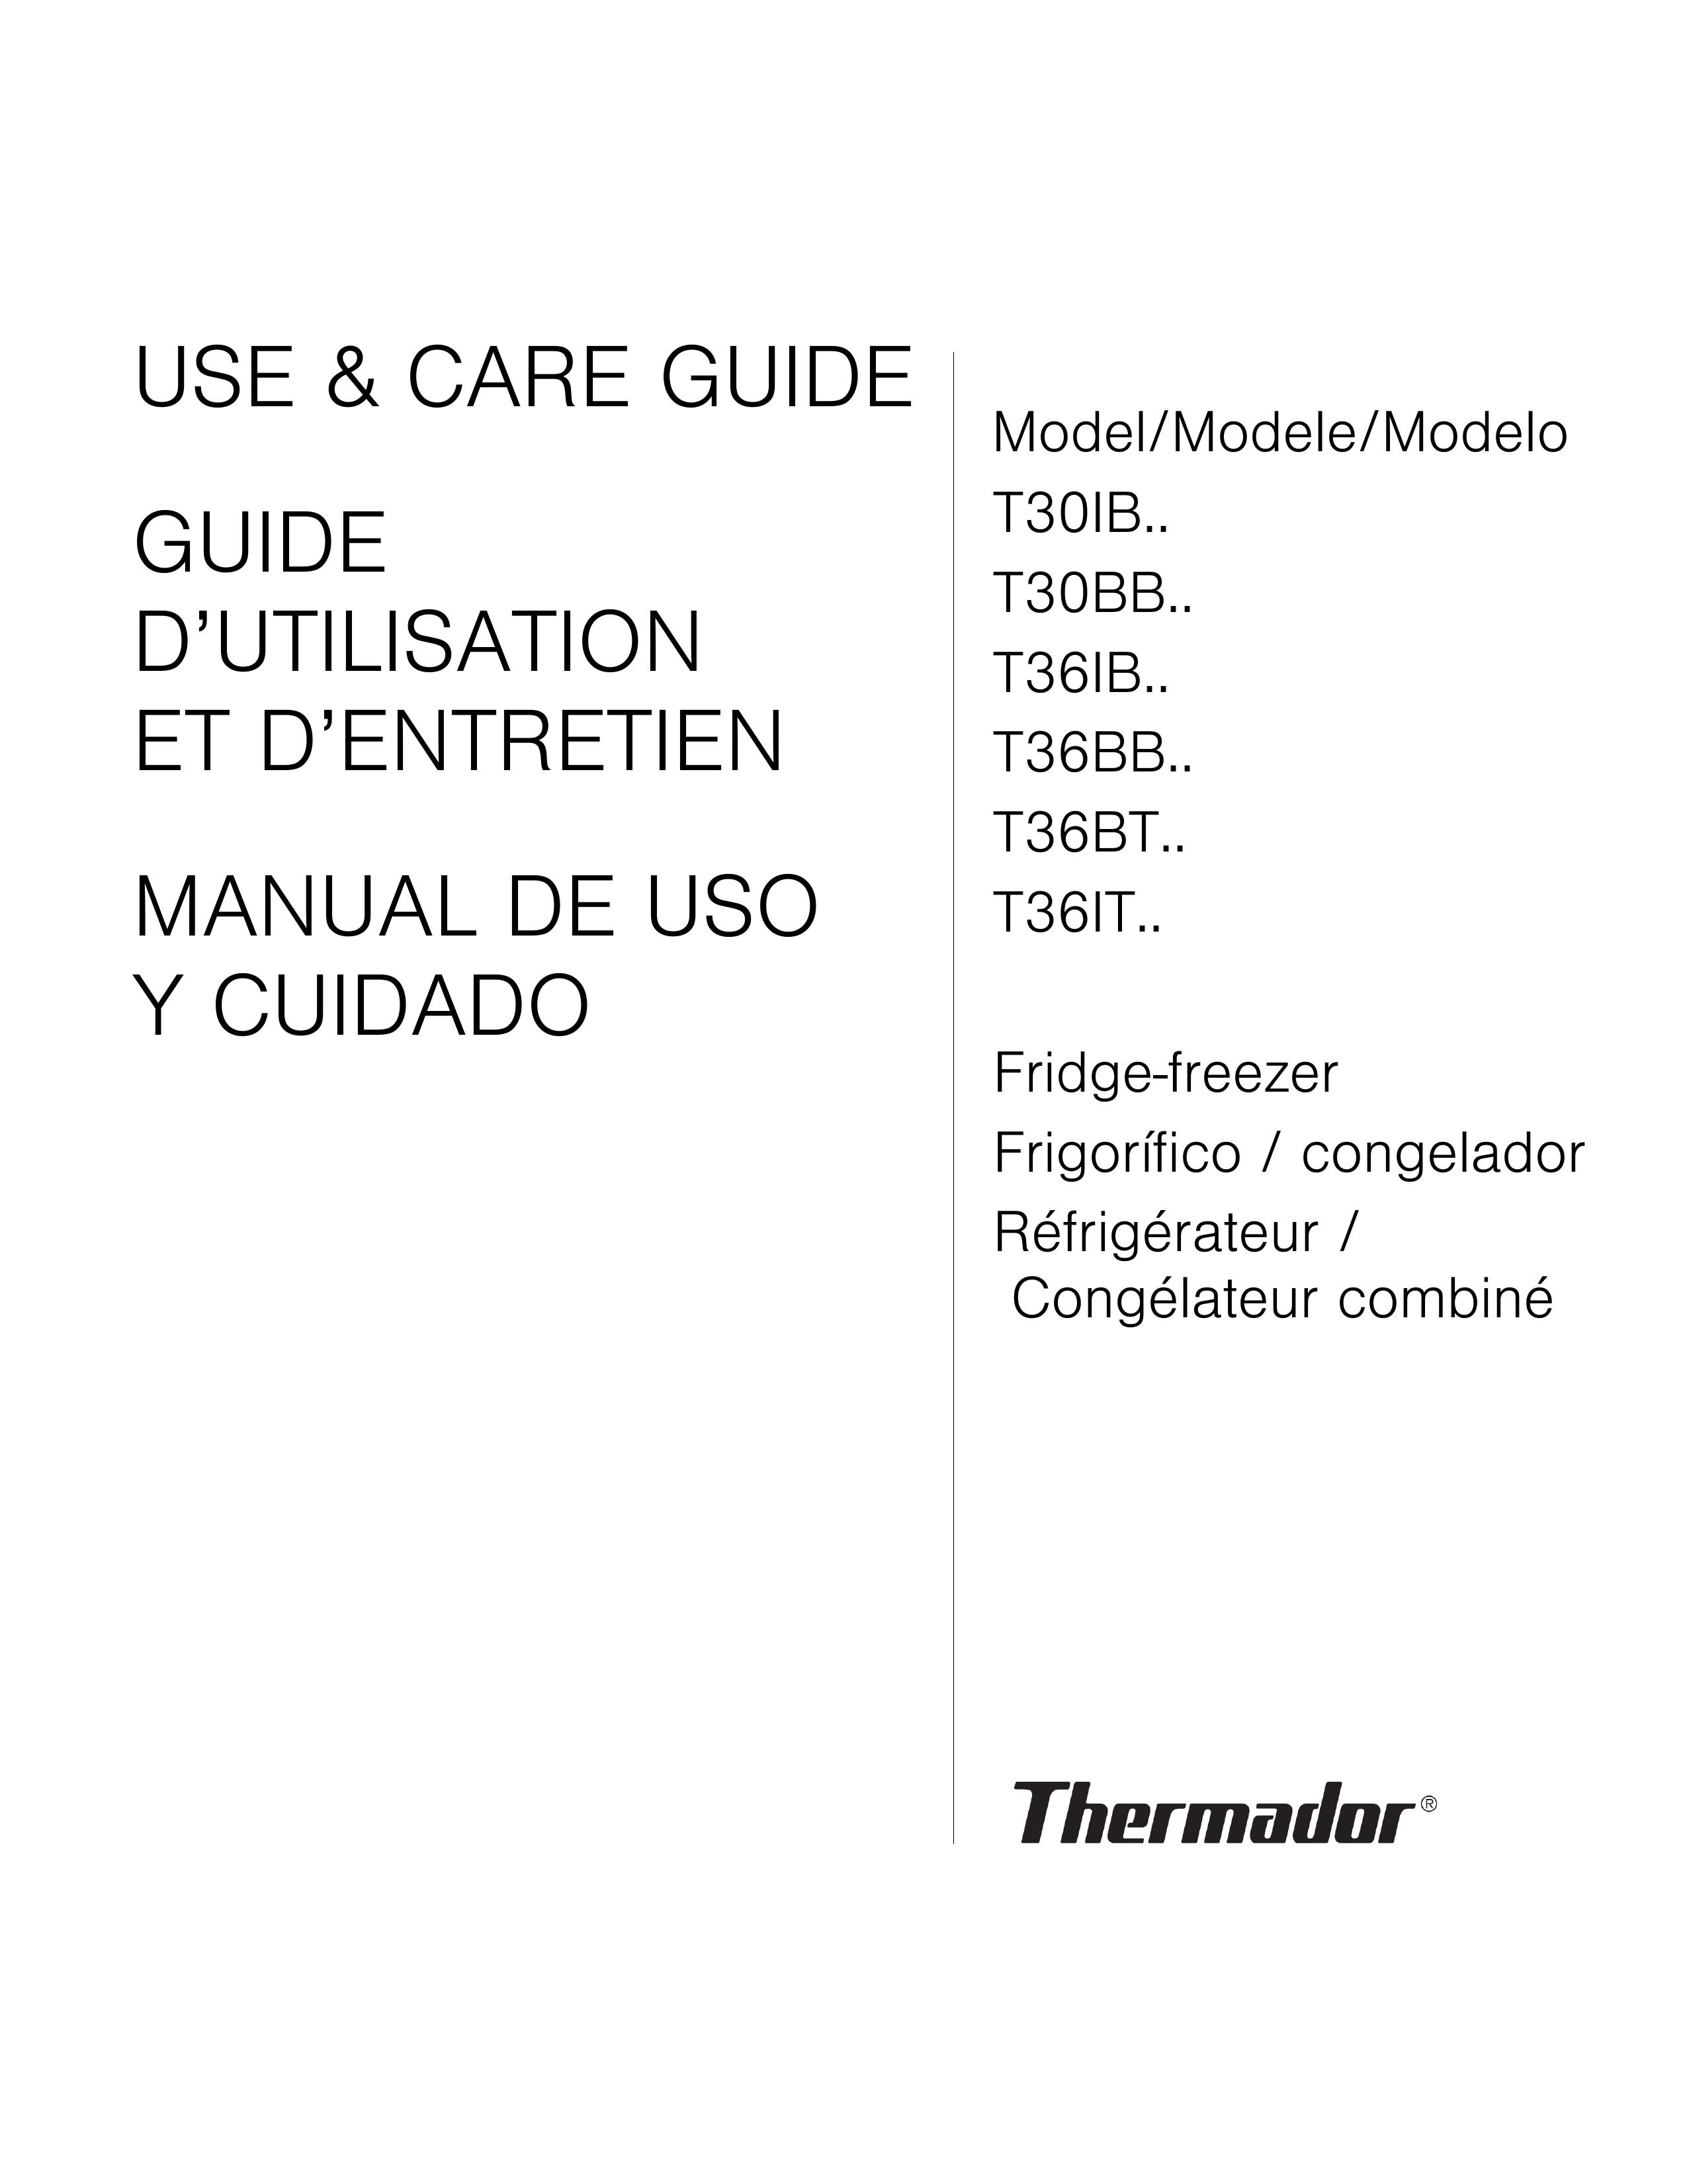 Thermador T36BT Refrigerator User Manual